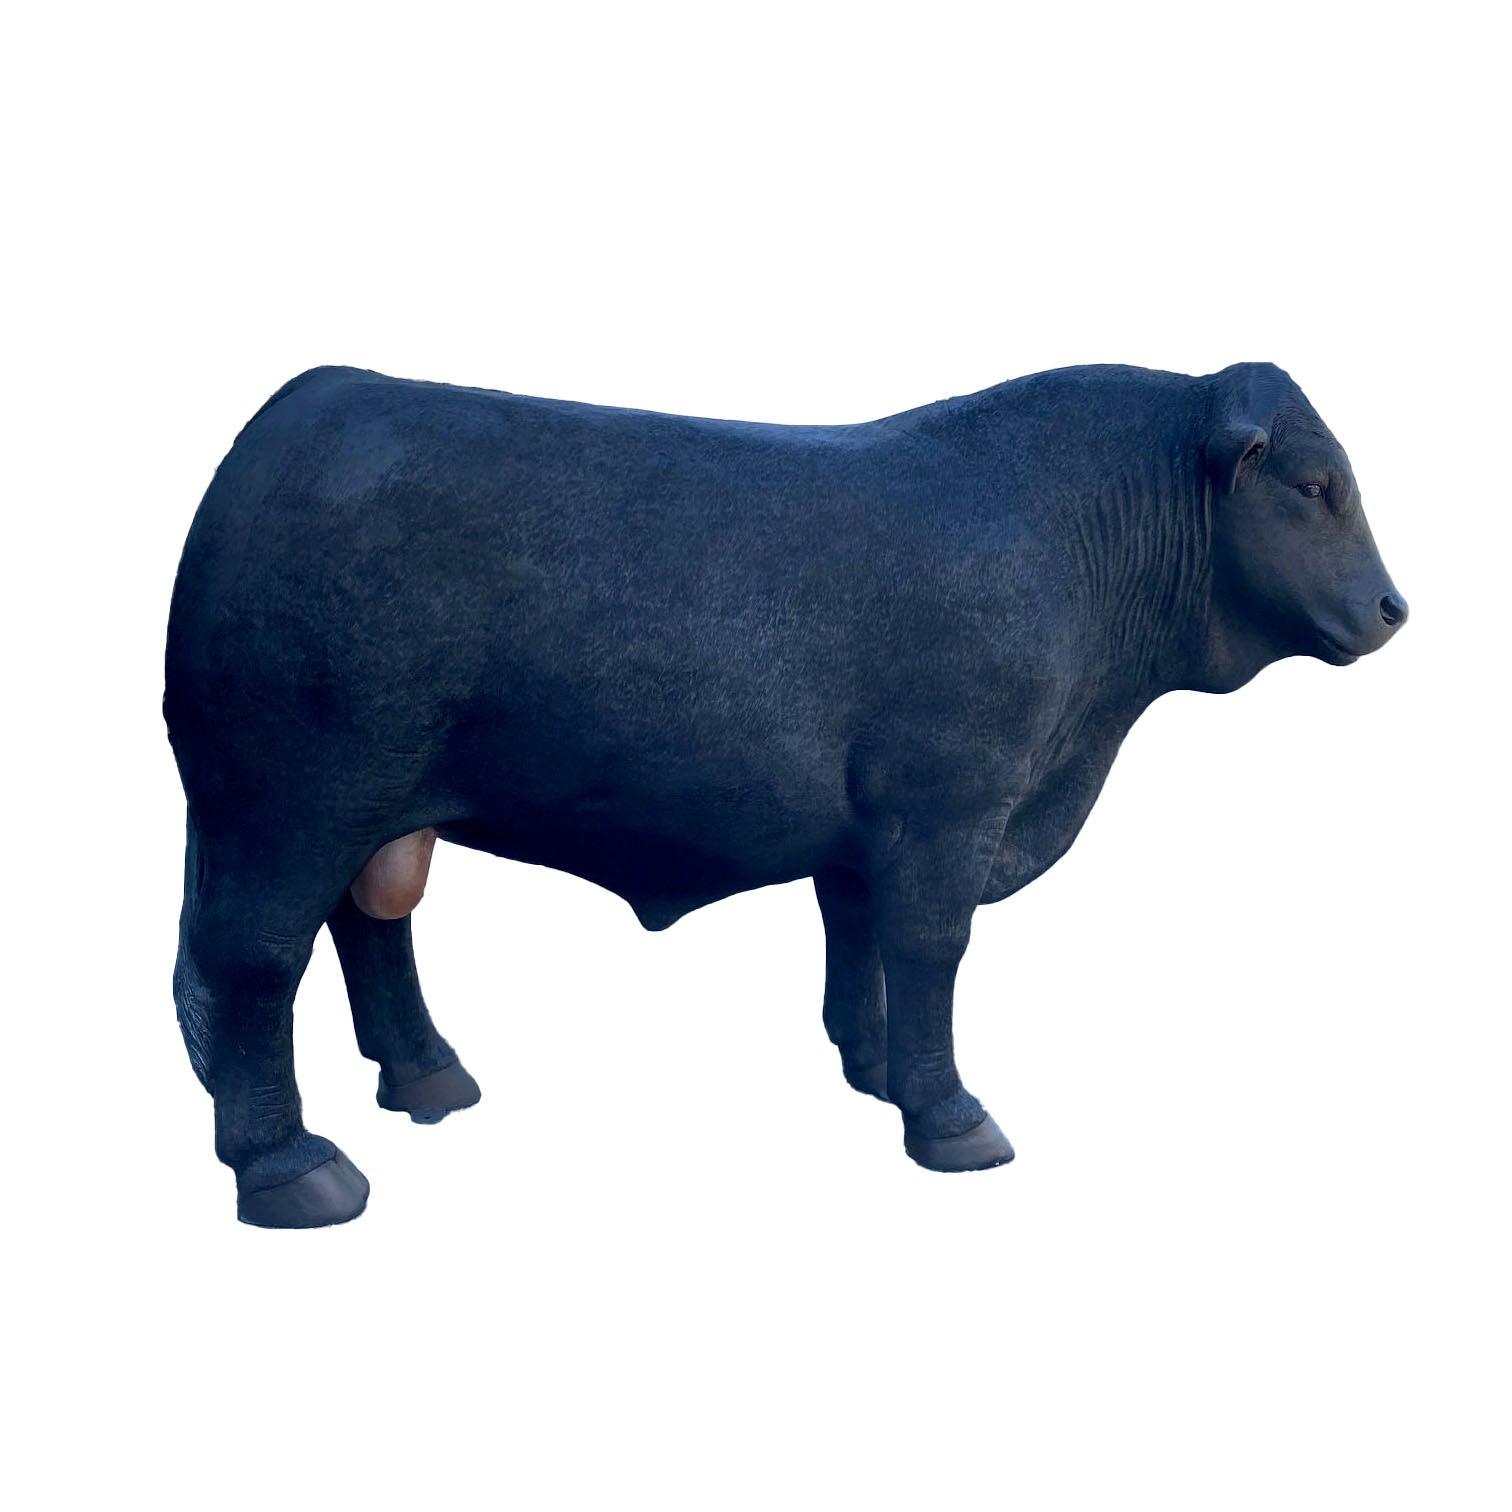 Angus Bull Cow Statue - LM Treasures Prop Rentals 